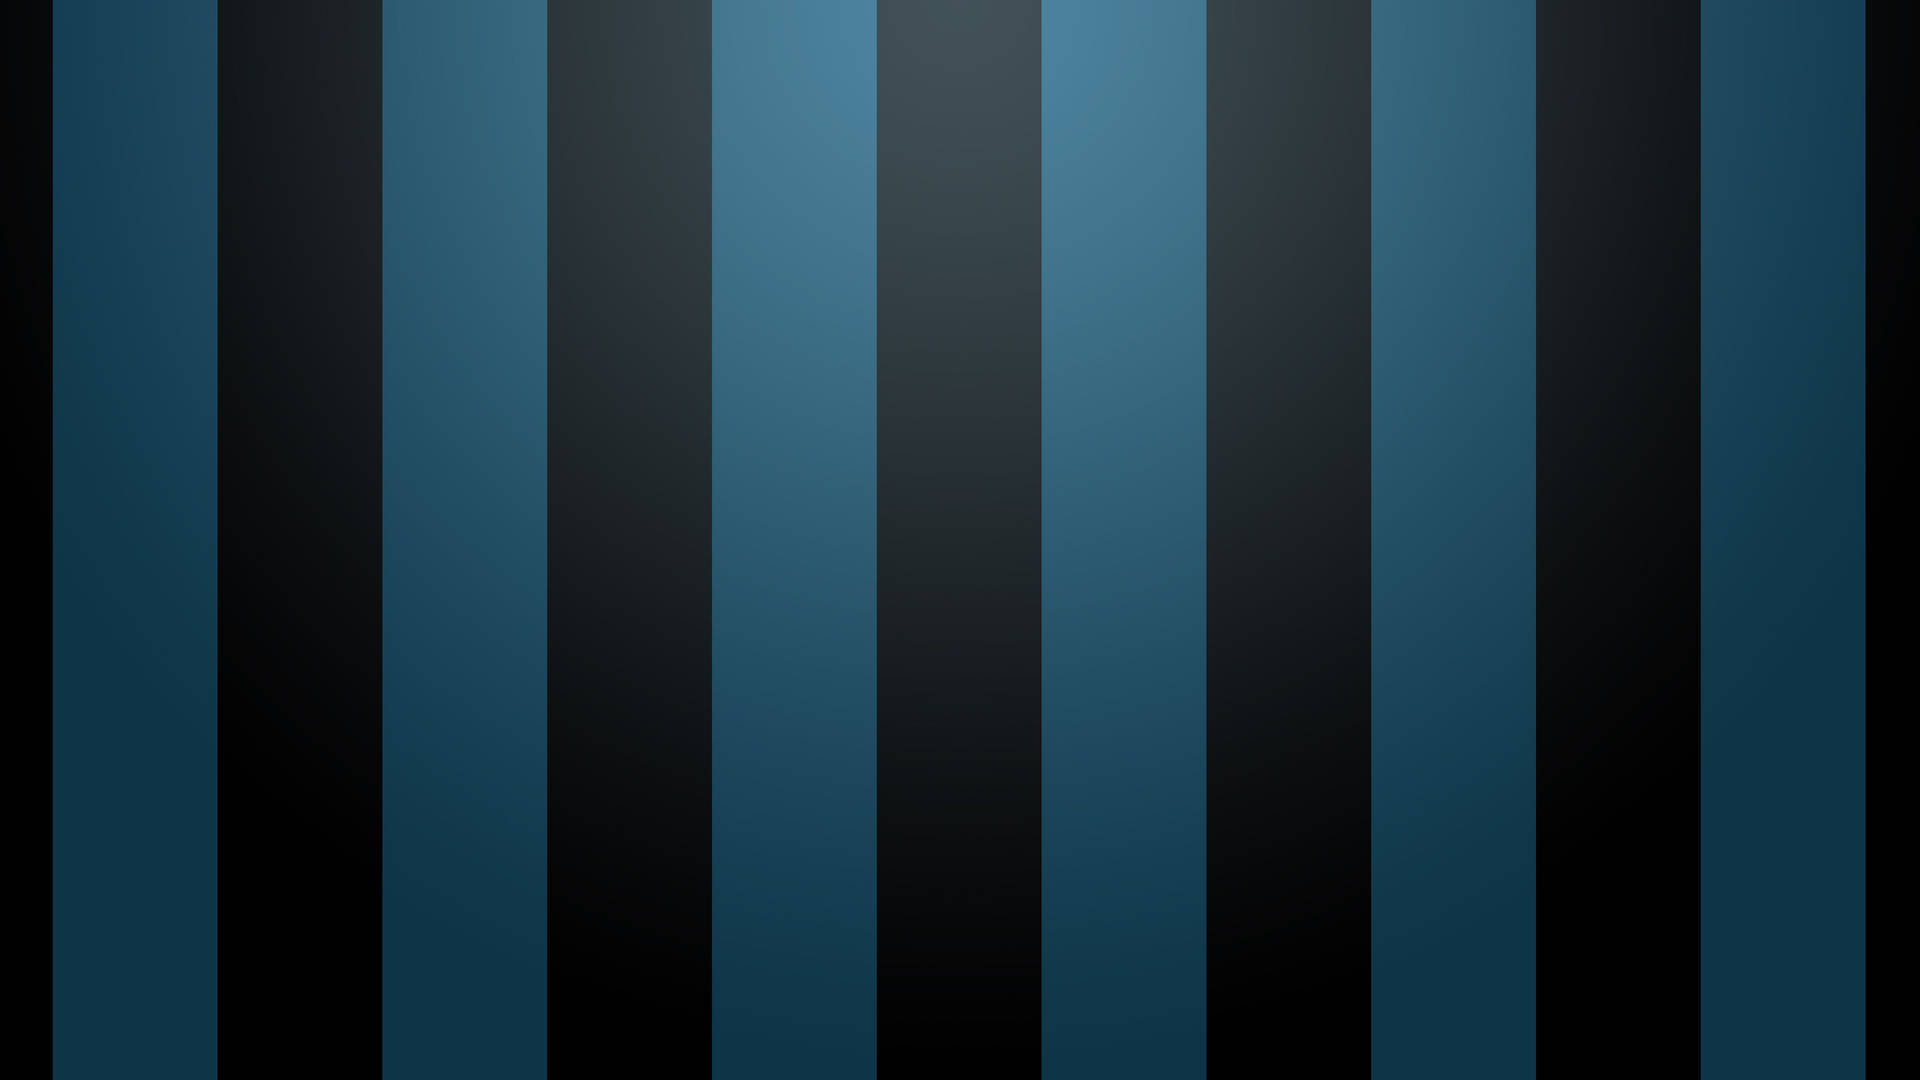 Vignette Blue and Black Striped Pattern Wallpaper